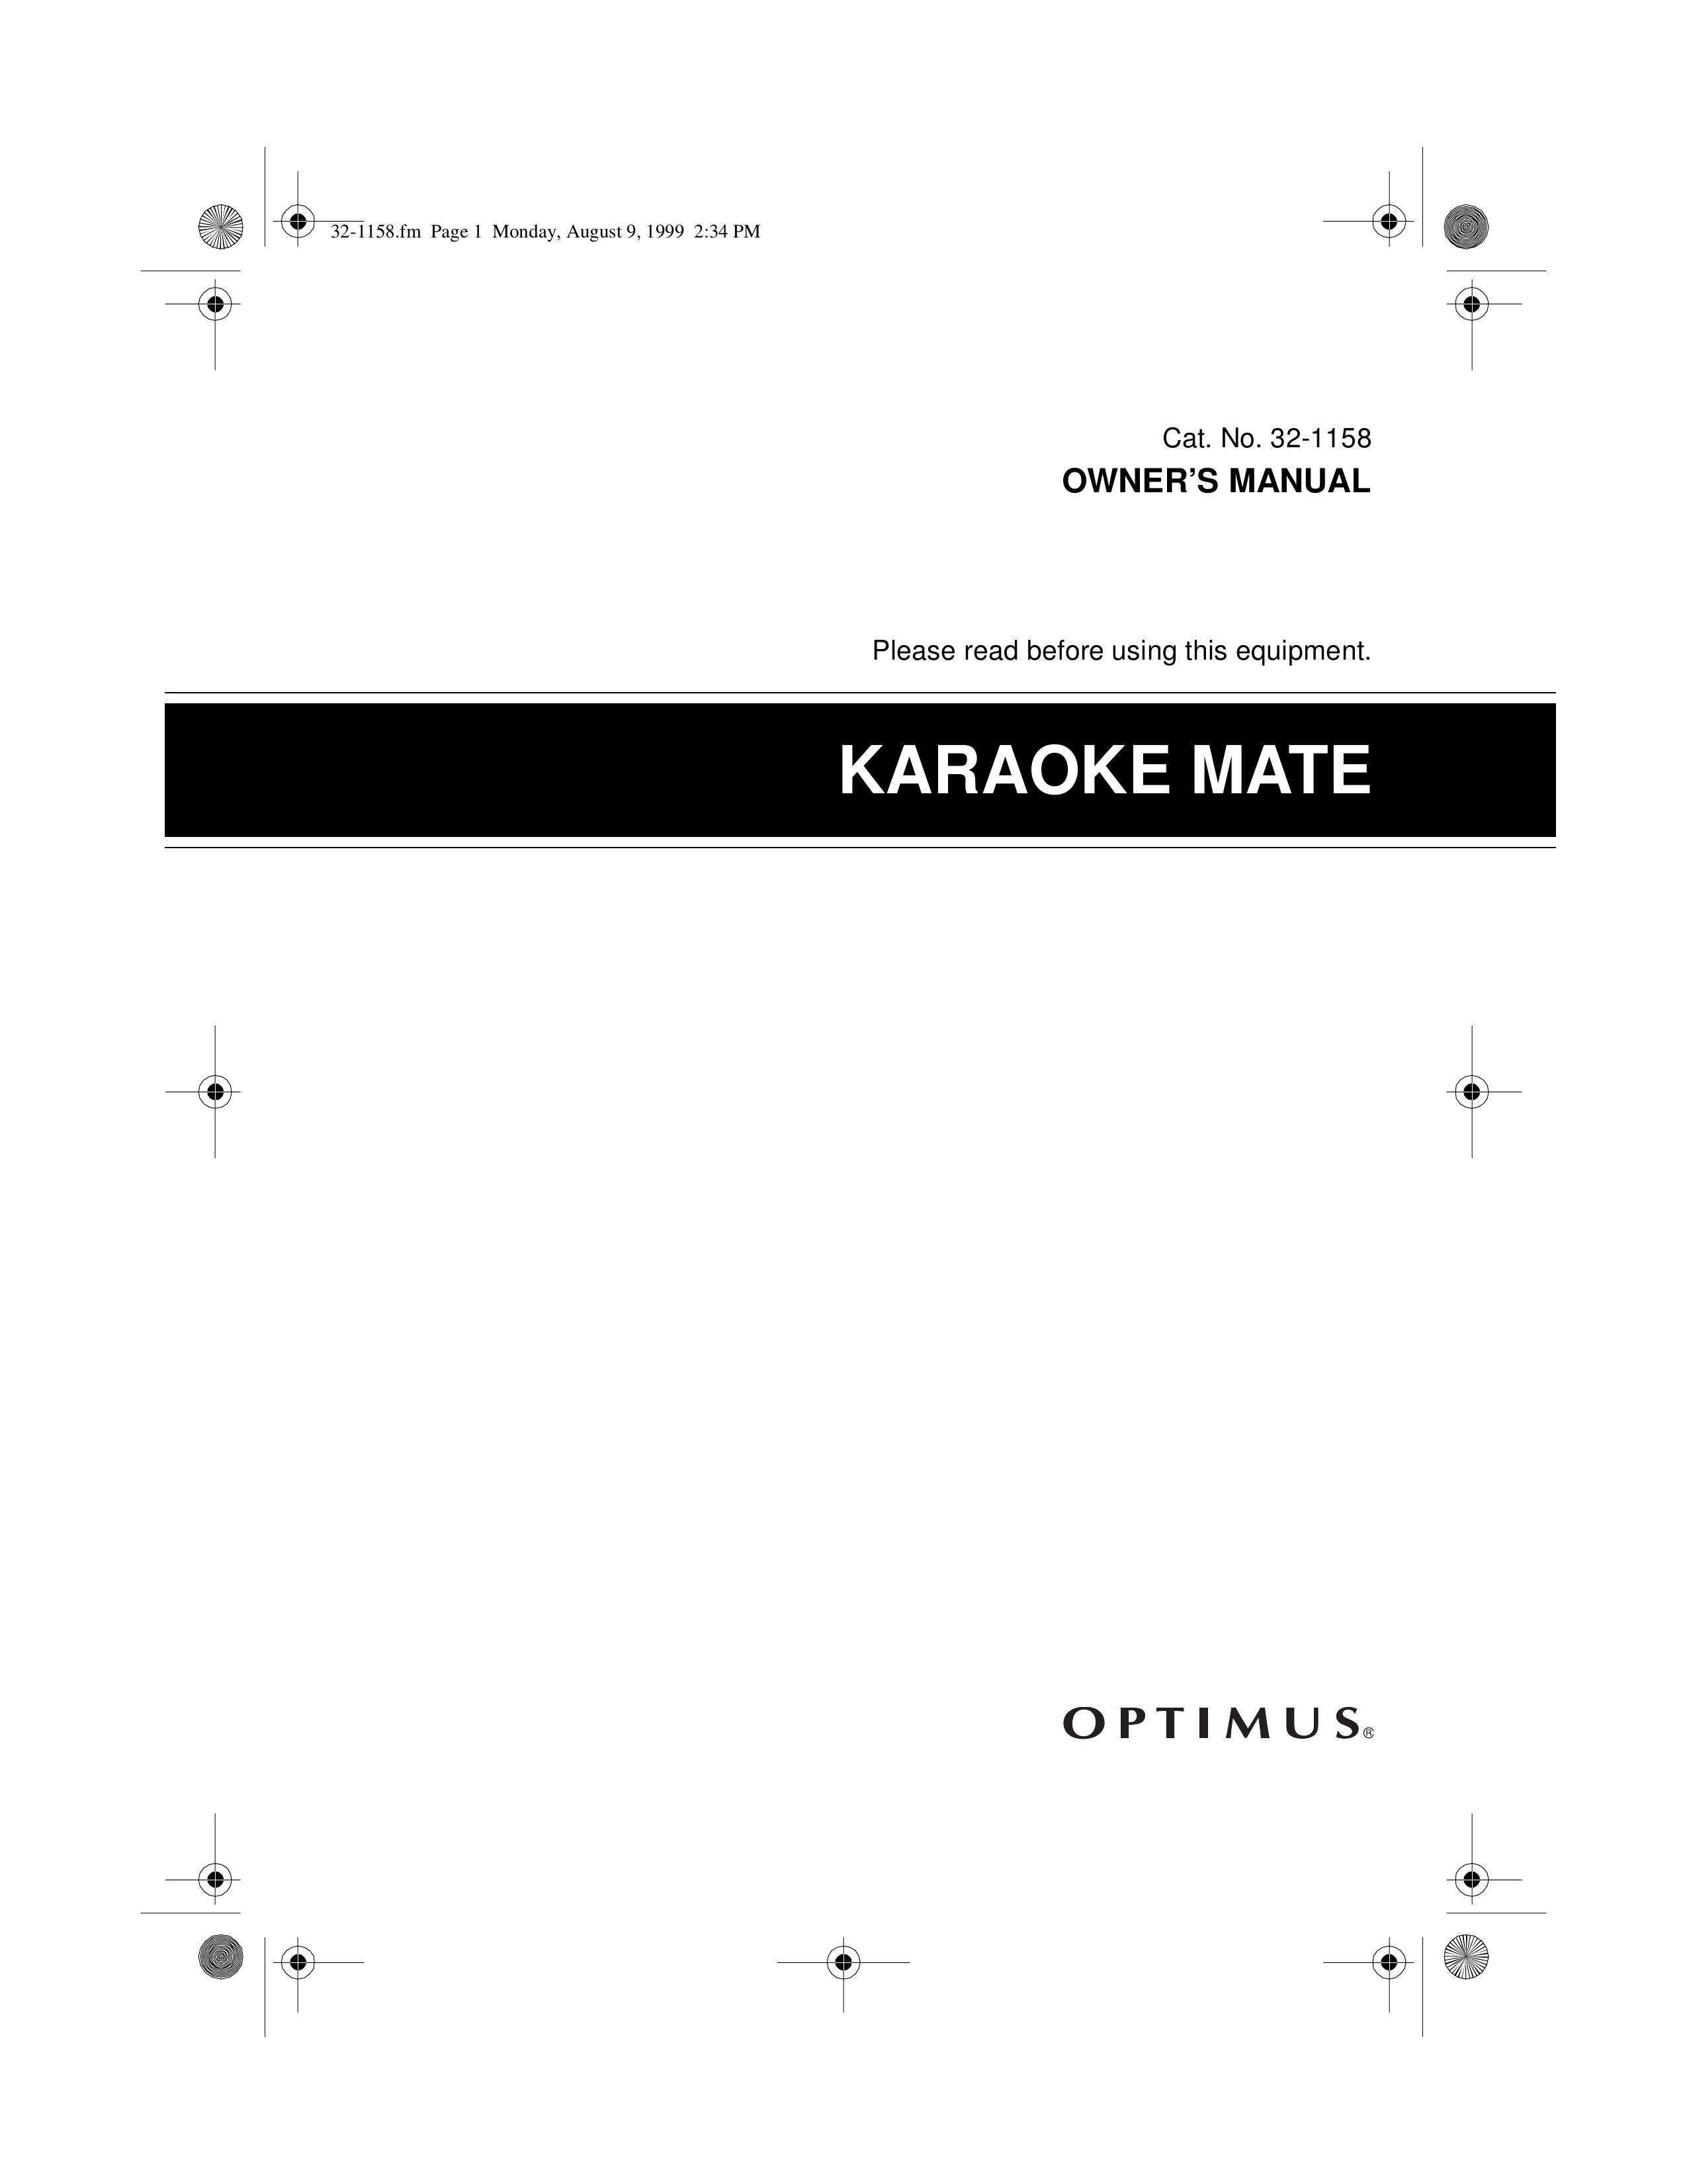 Optimus 32-1158 Karaoke Machine User Manual